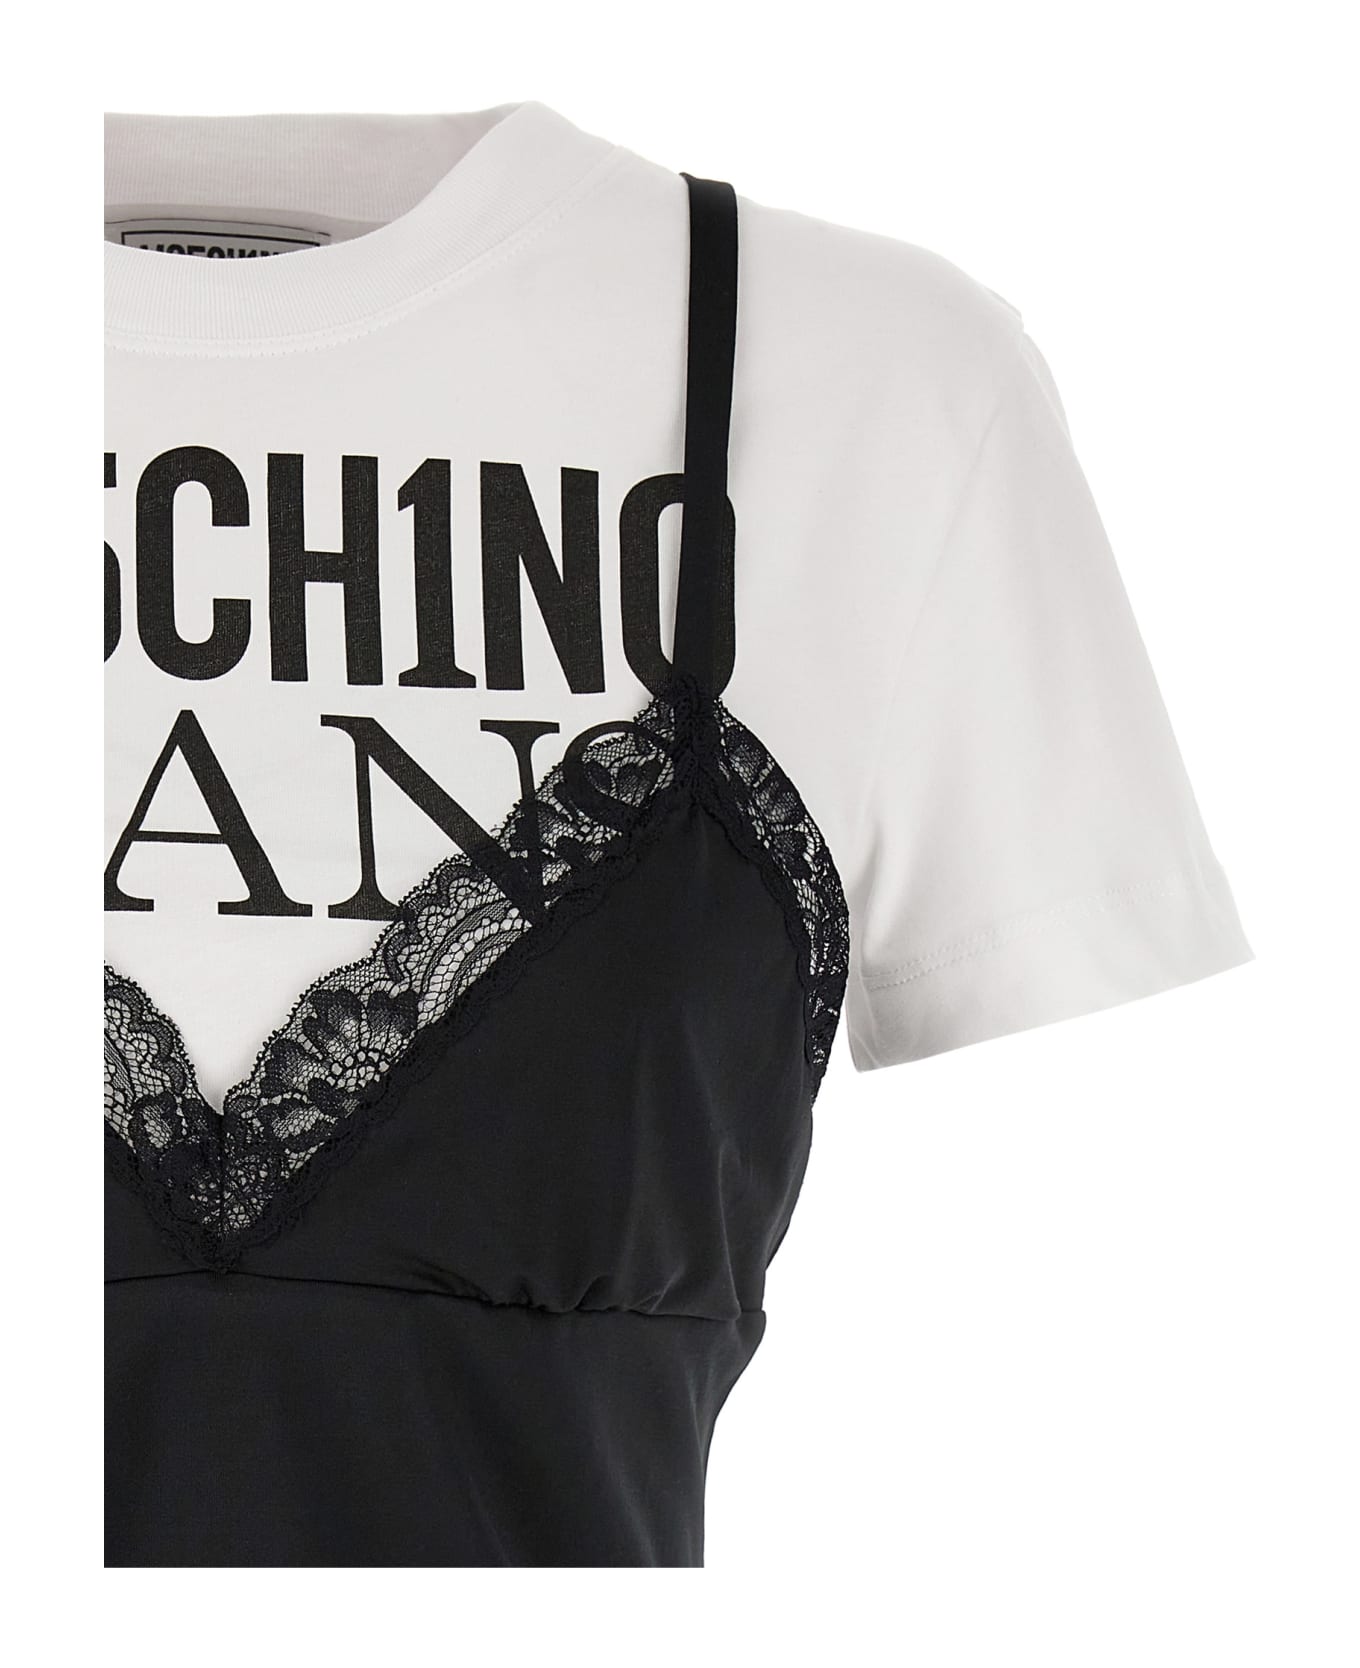 M05CH1N0 Jeans Top Insert T-shirt - Fantasia Nero